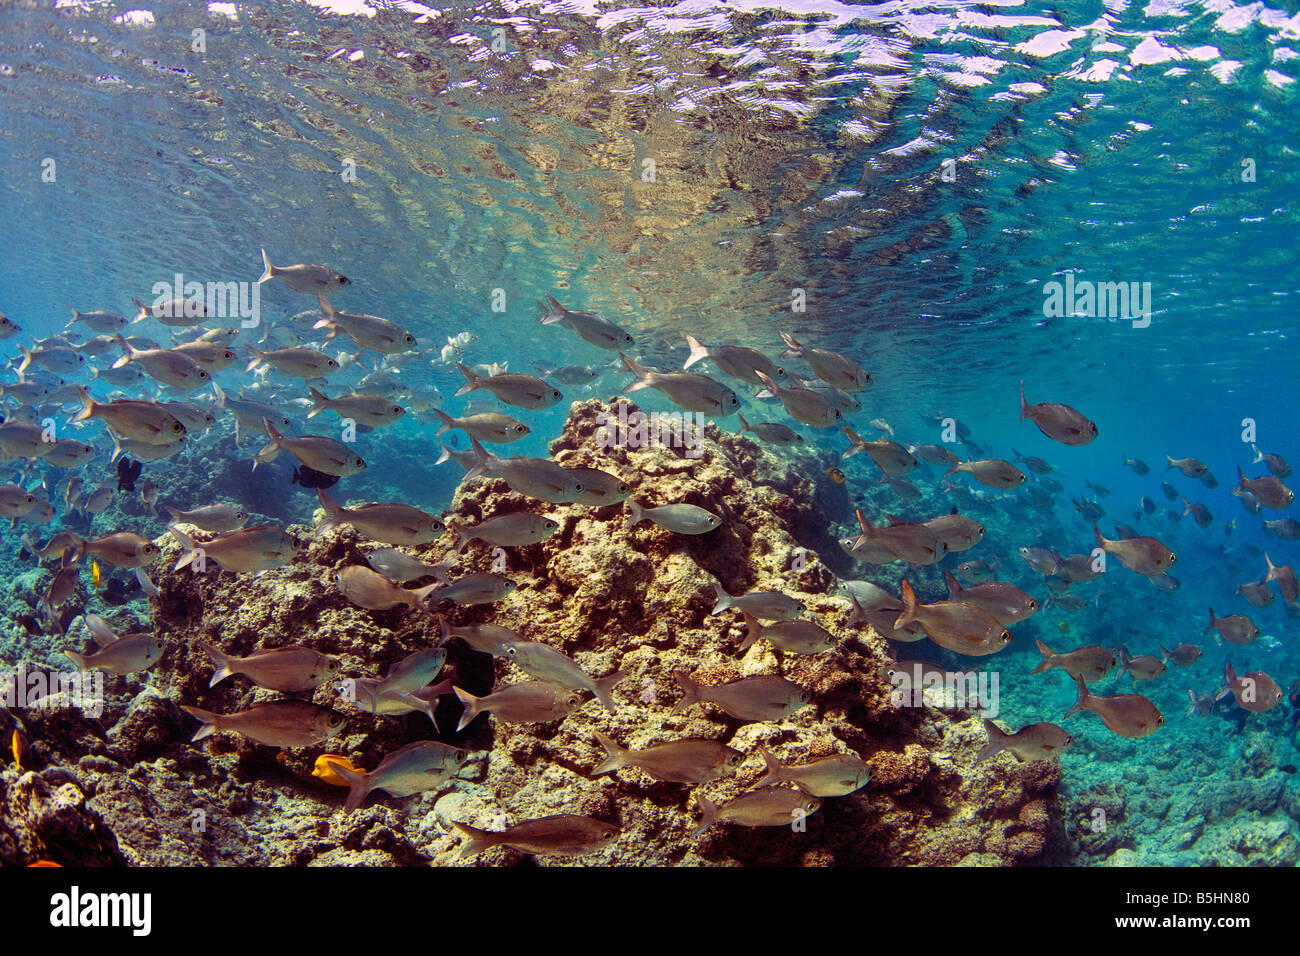 A large school of Hawaiian flagtail fish swim in waters off Maui, Hawaii Stock Photo